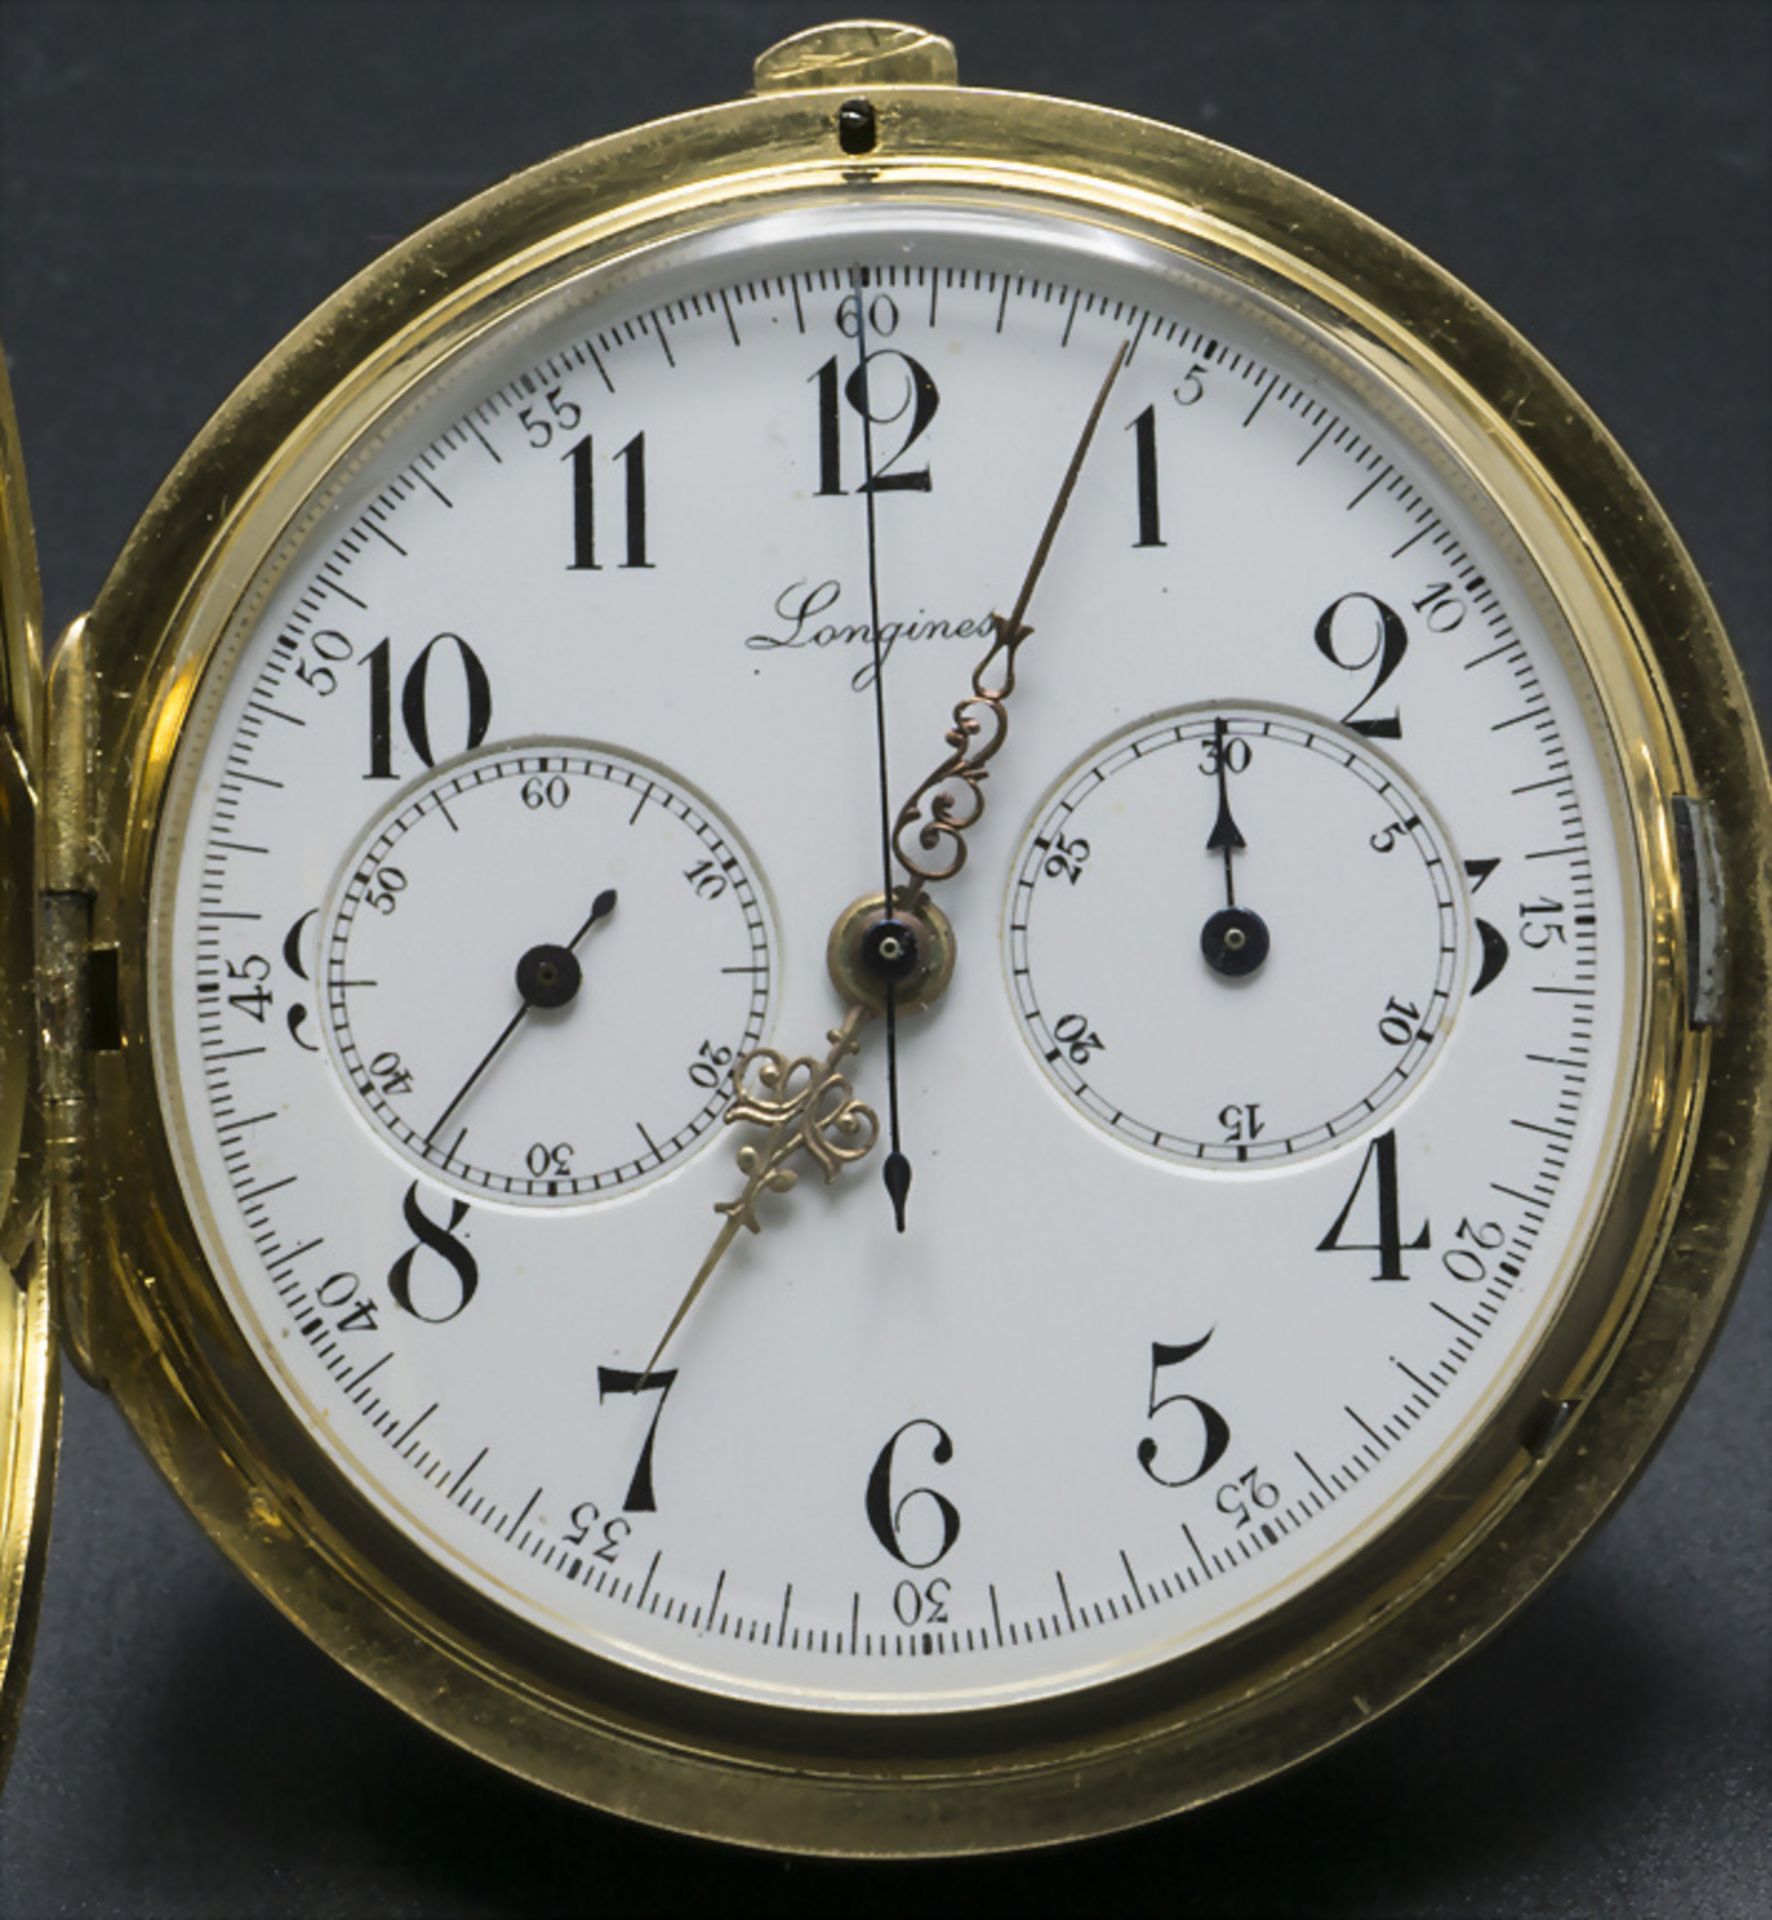 Savonette, Chronograph, Longines, Schweiz / Swiss, um 1920 - Image 2 of 6